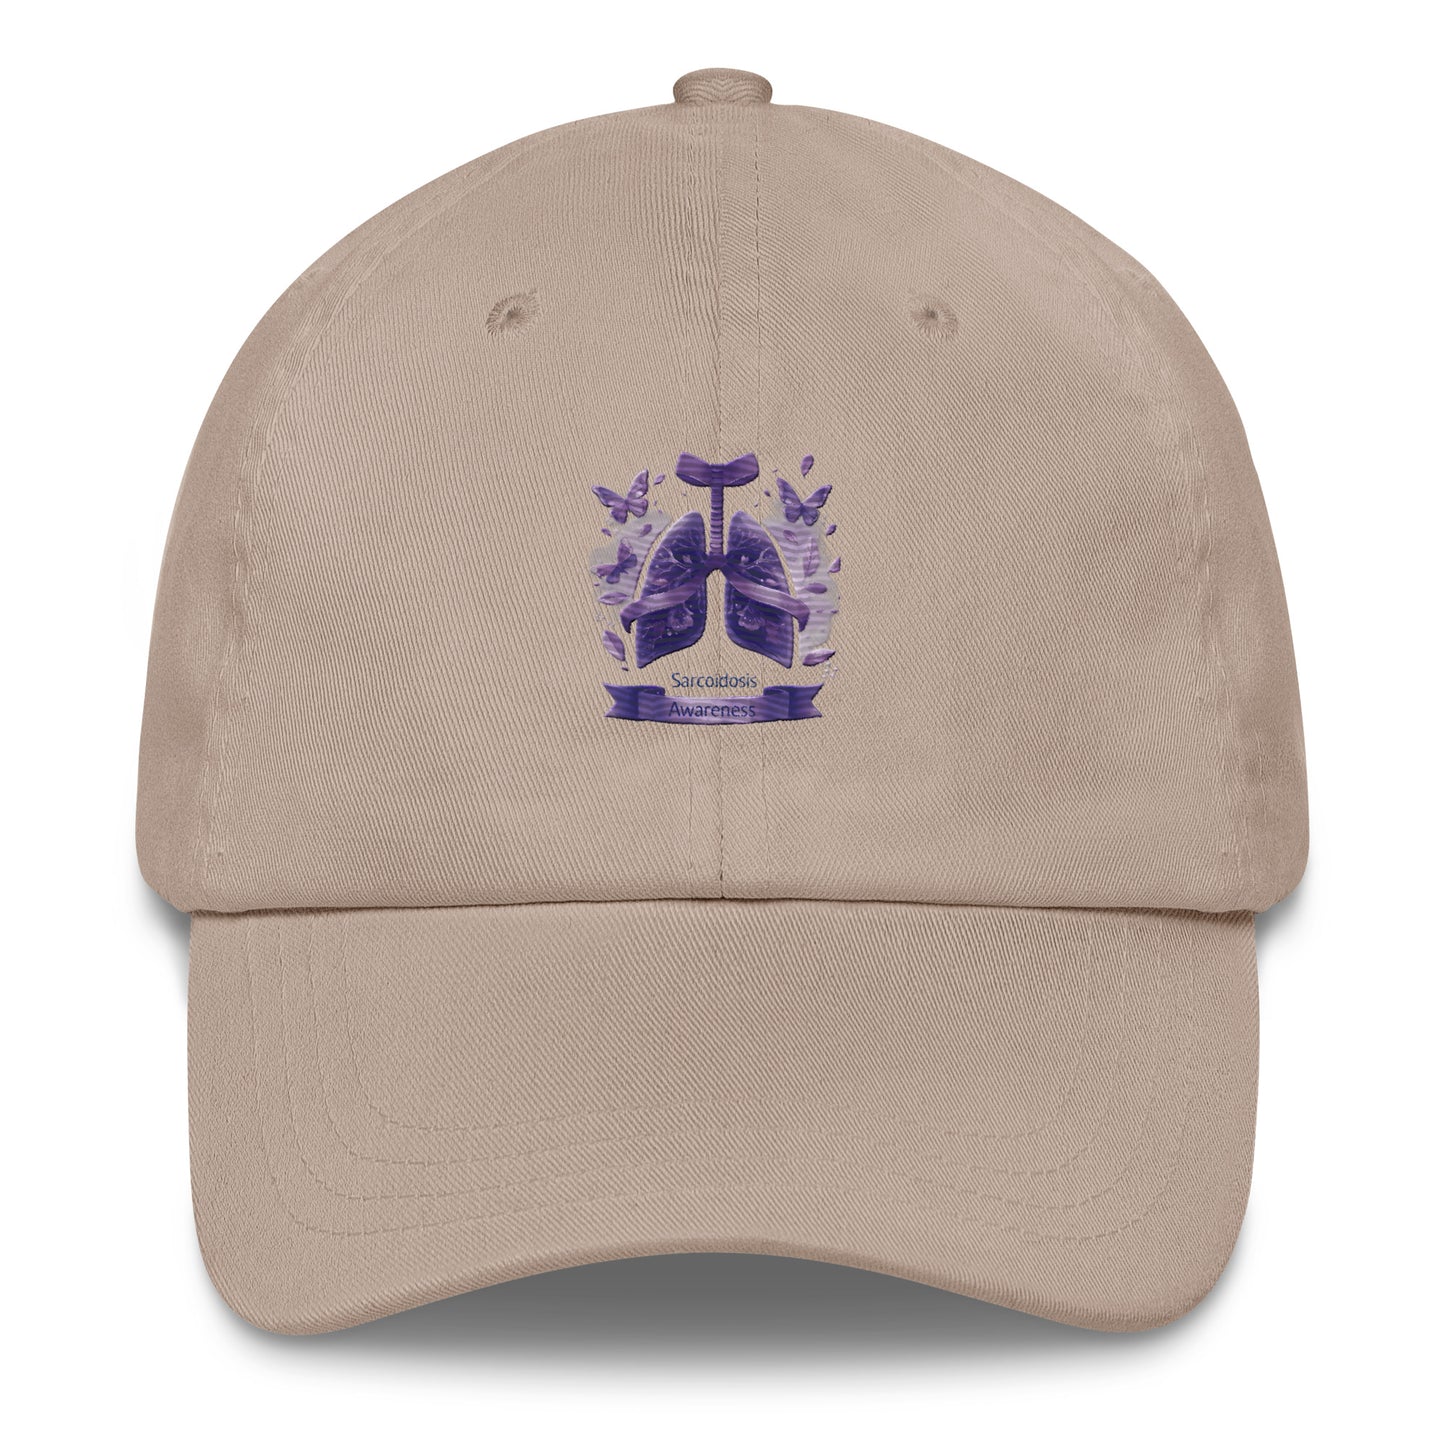 I Sport Purple For Sarcoidosis Awareness Butterflies Space Dad Cap